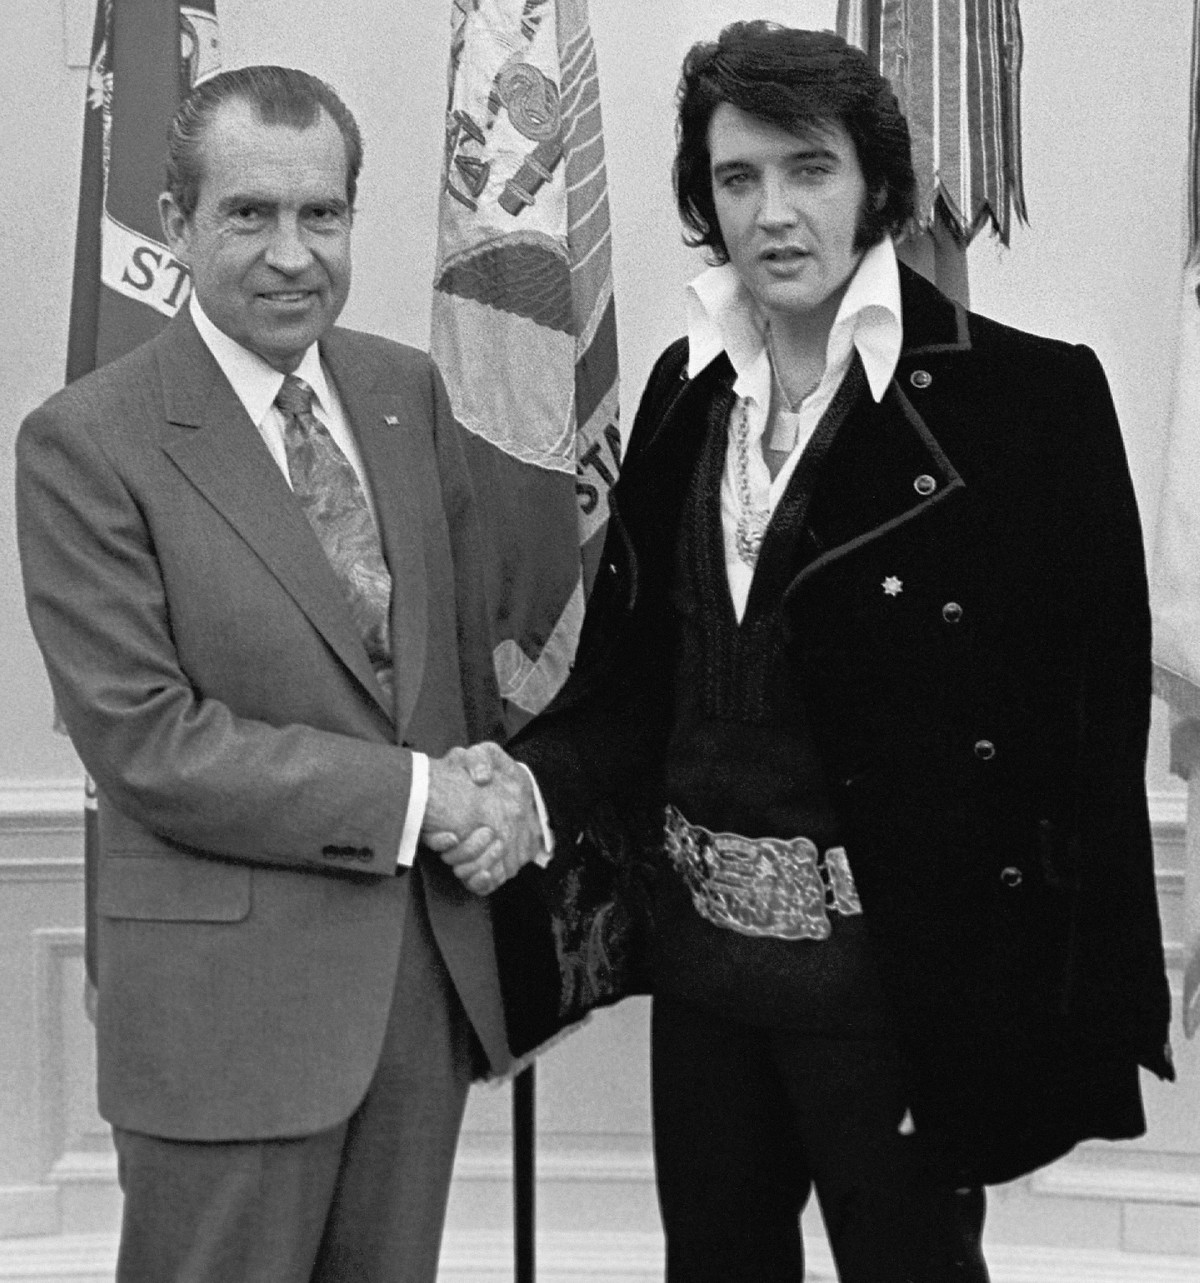 Elvis Presley and Richard Nixon, the famous handshake...